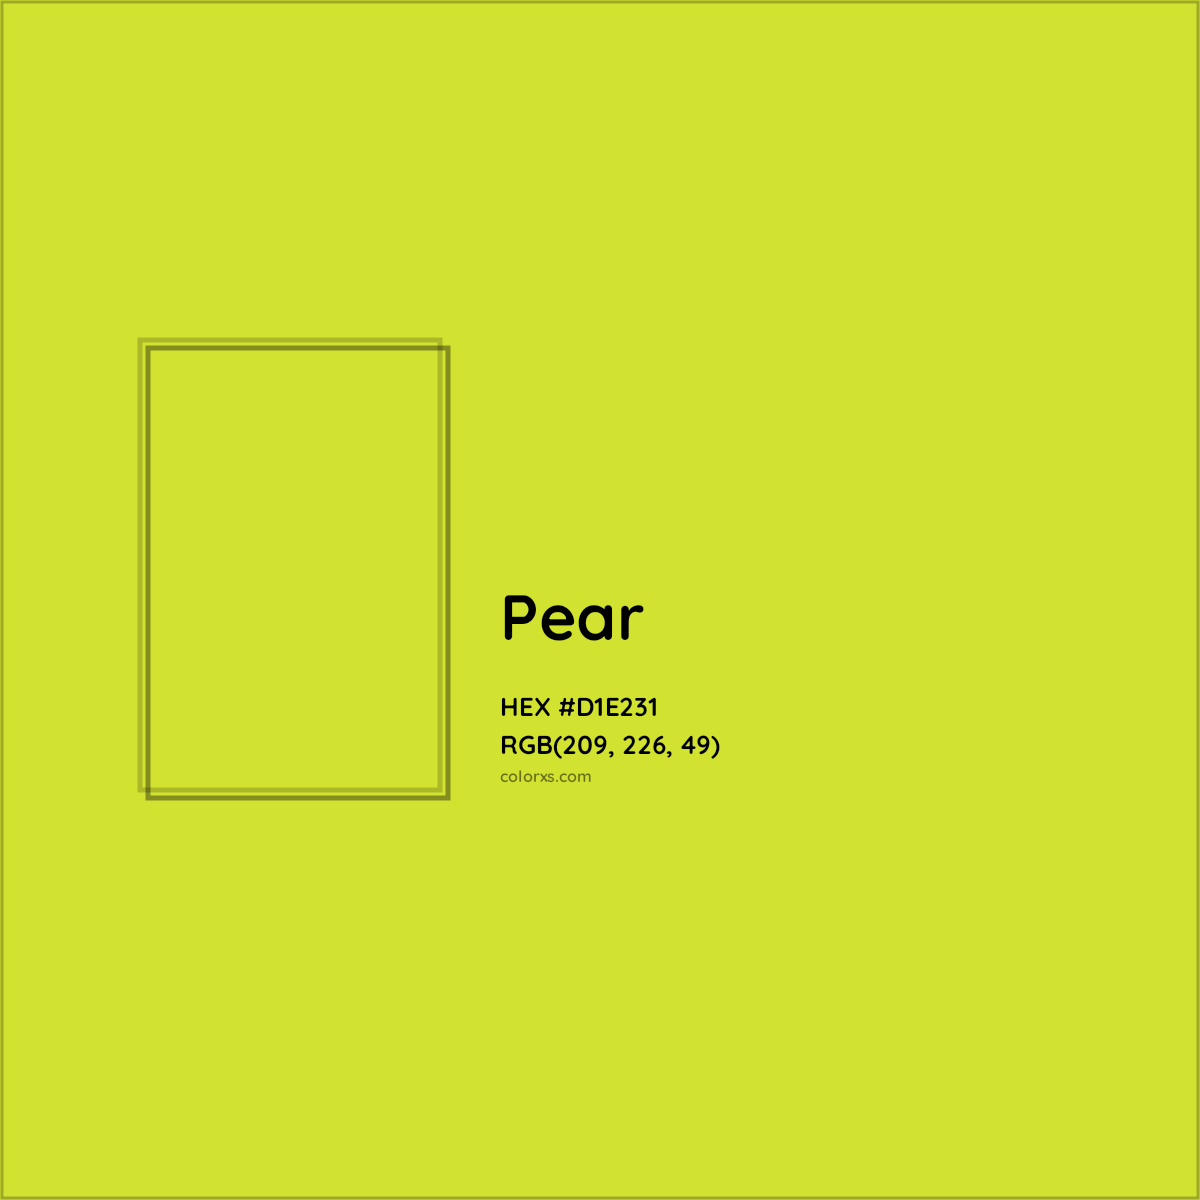 HEX #D1E231 Pear Color - Color Code